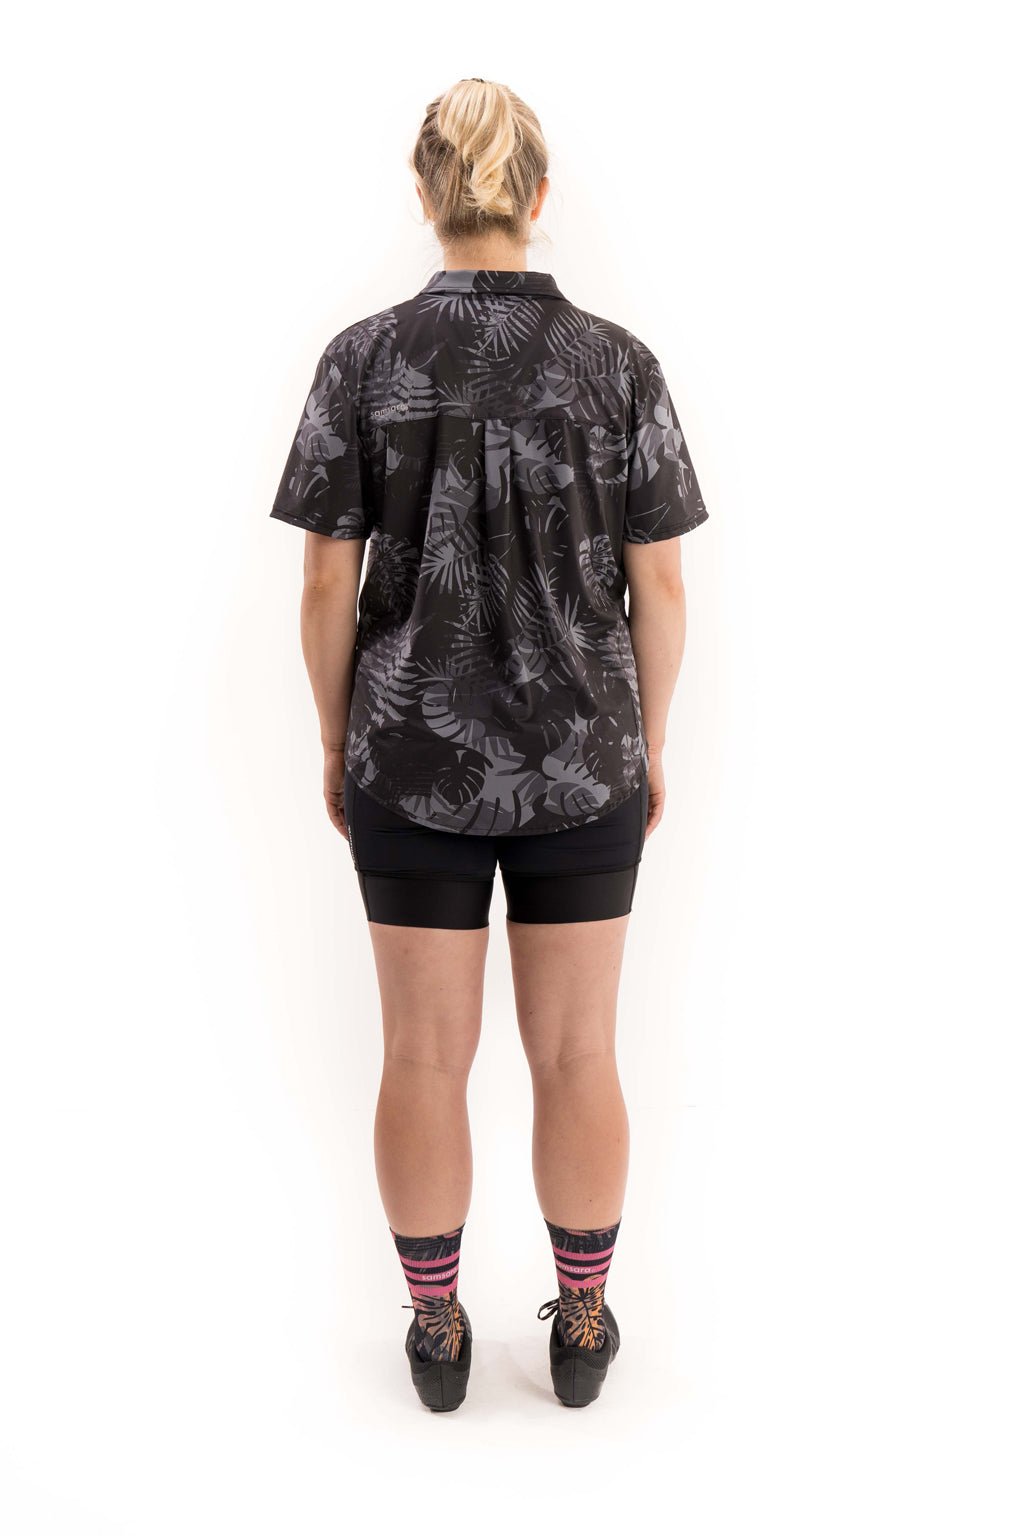 Getaway Shirt - Black Palm - Samsara Cycle-Trail Jerseys